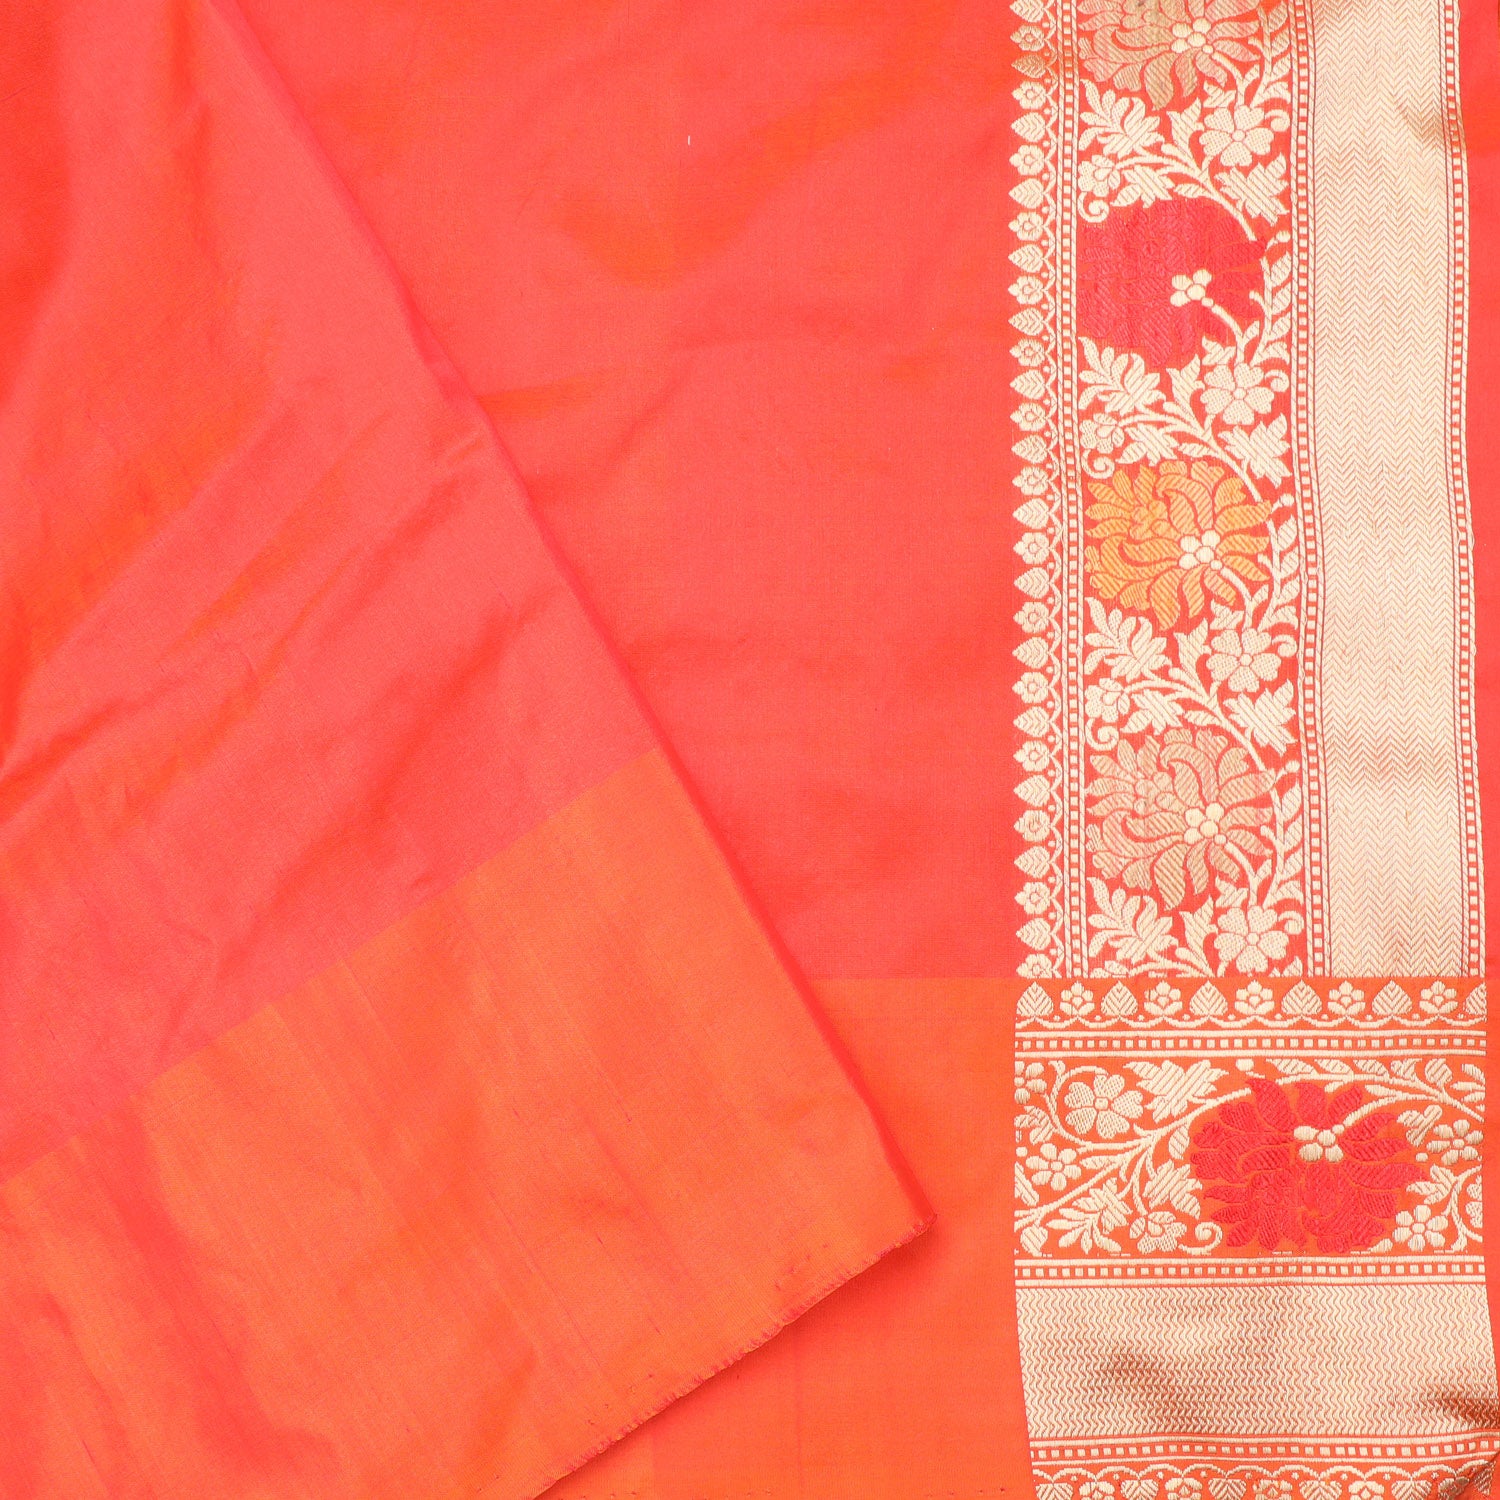 Tomato Red Banarasi Silk Handloom Saree With Floral Jaal Design - Singhania's